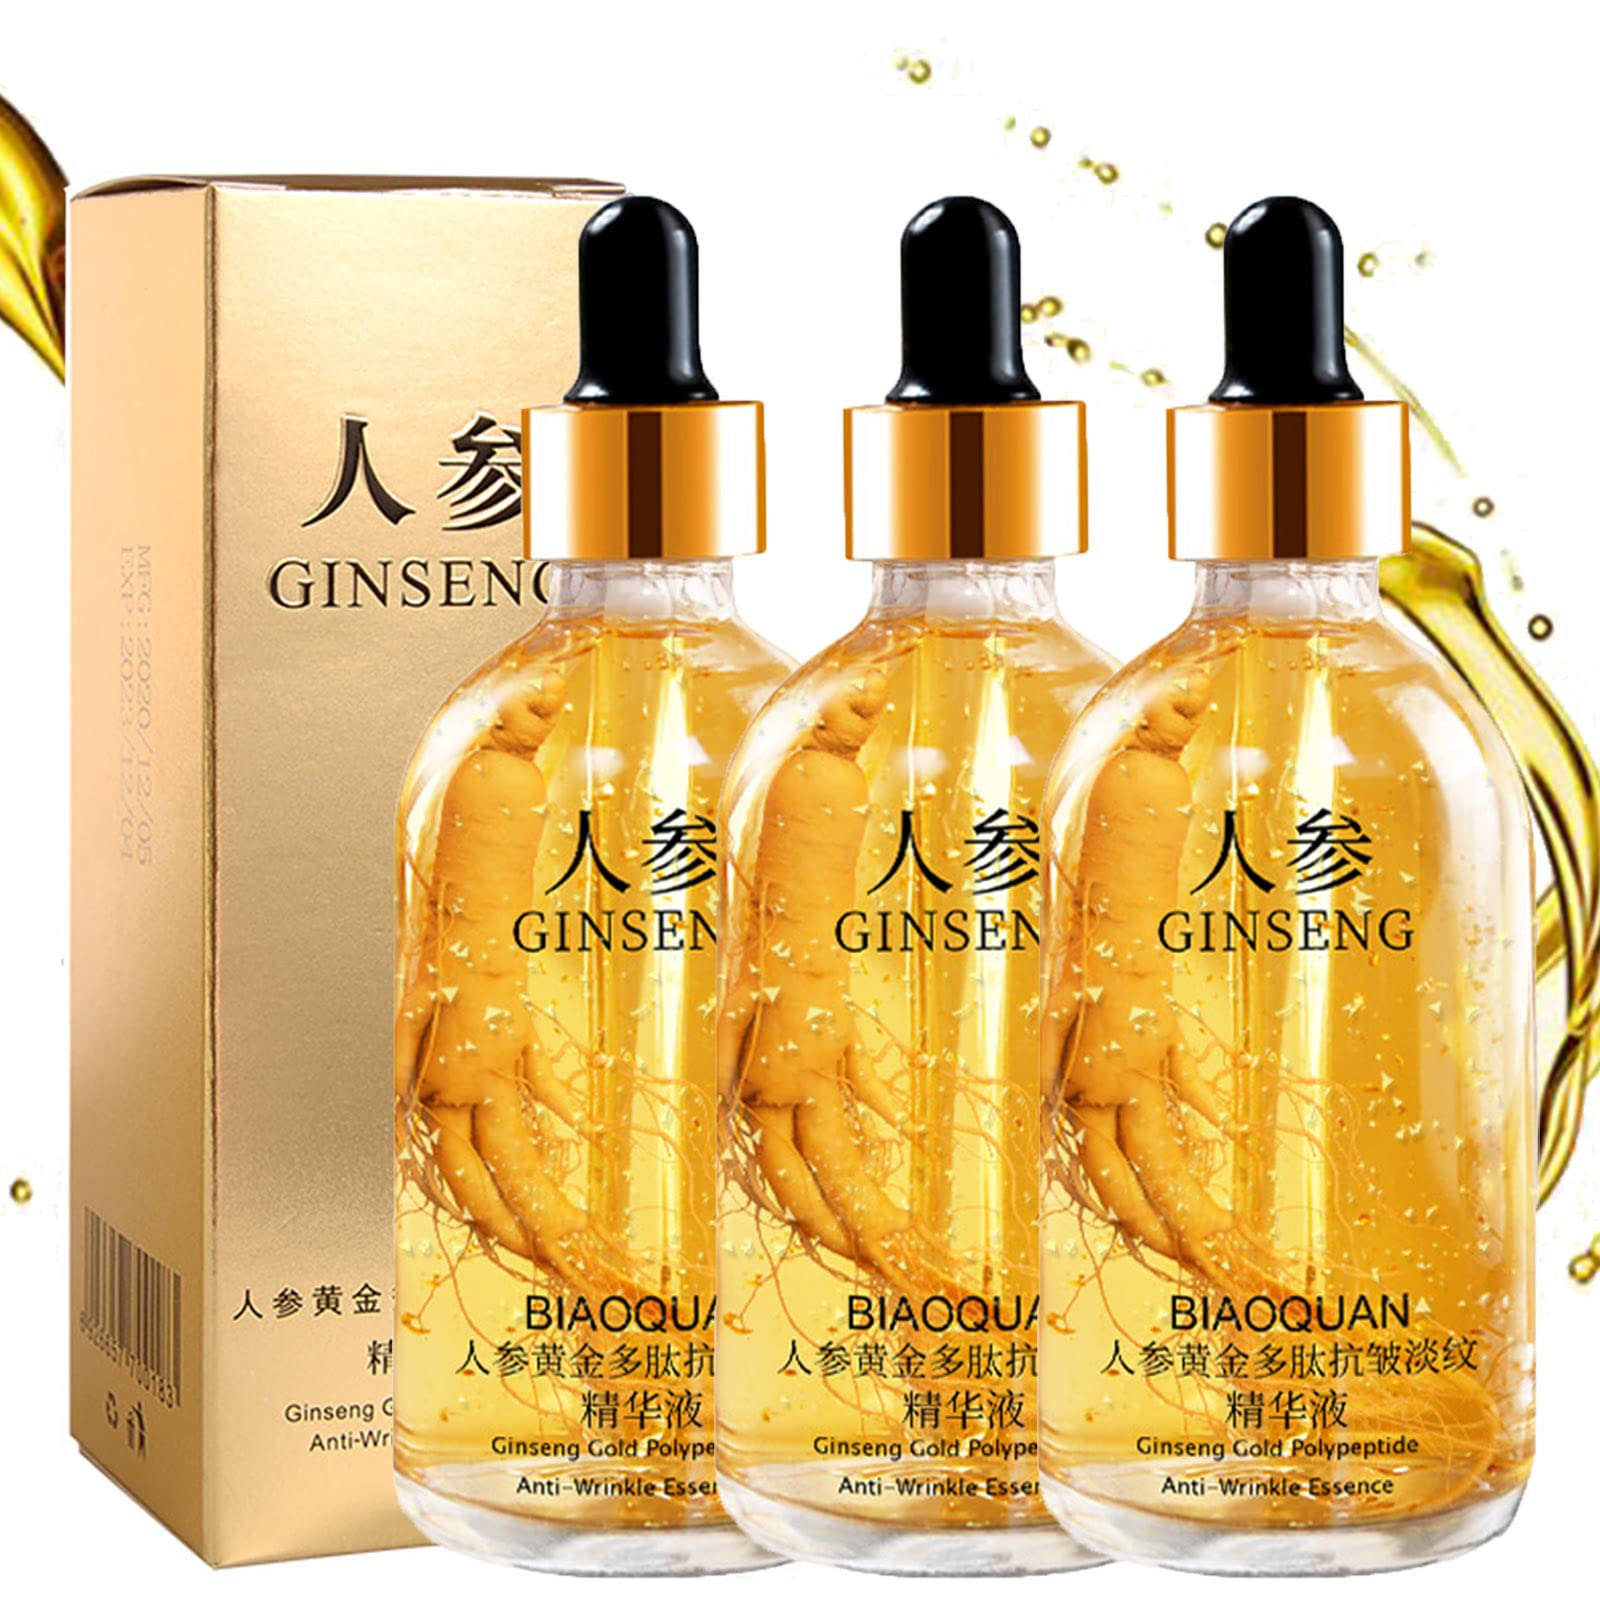 NNBWLMAEE Ginseng Polypeptide Anti-Ageing Essence, Ginseng Gold Polypeptide Anti-Ageing Anti-Wrinkle Essence, Ginseng Serum for Tightening Sagging Skin Reduce Fine Lines (3pcs)